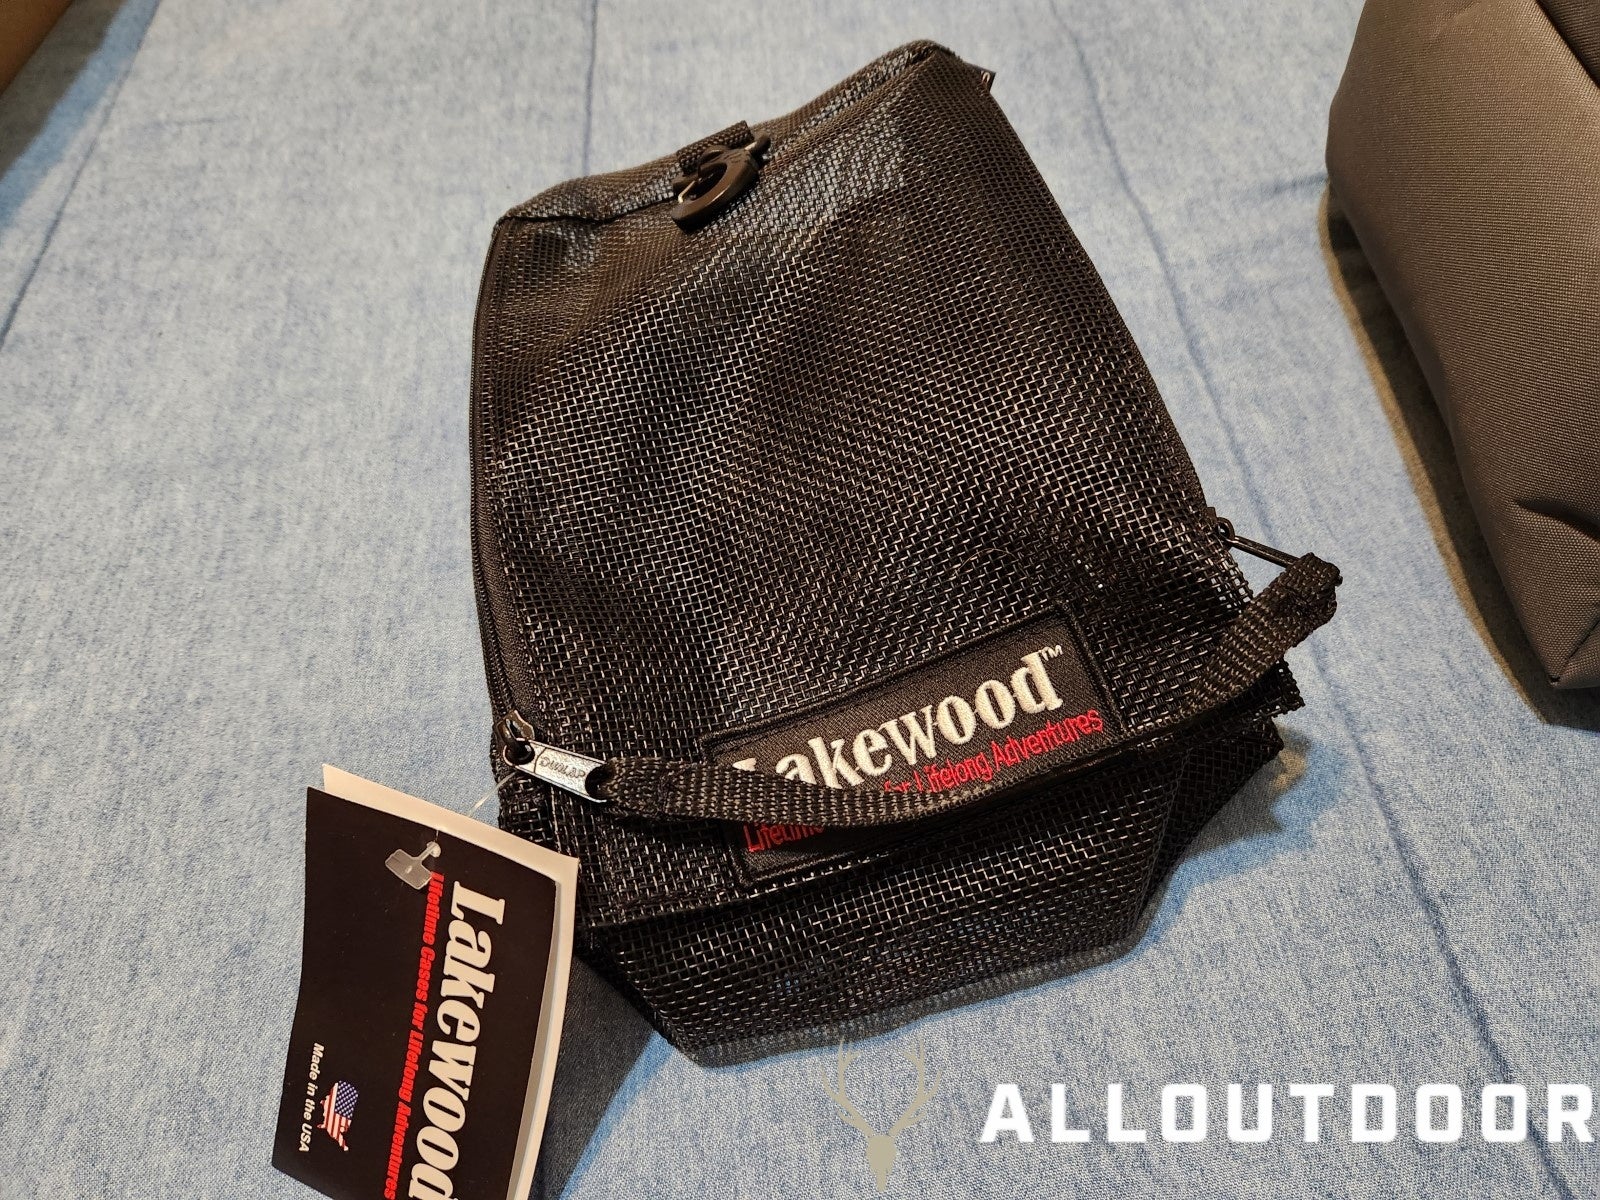 AllOutdoor Review – Lakewood Mini Sidekick Tackle Box & Billfold